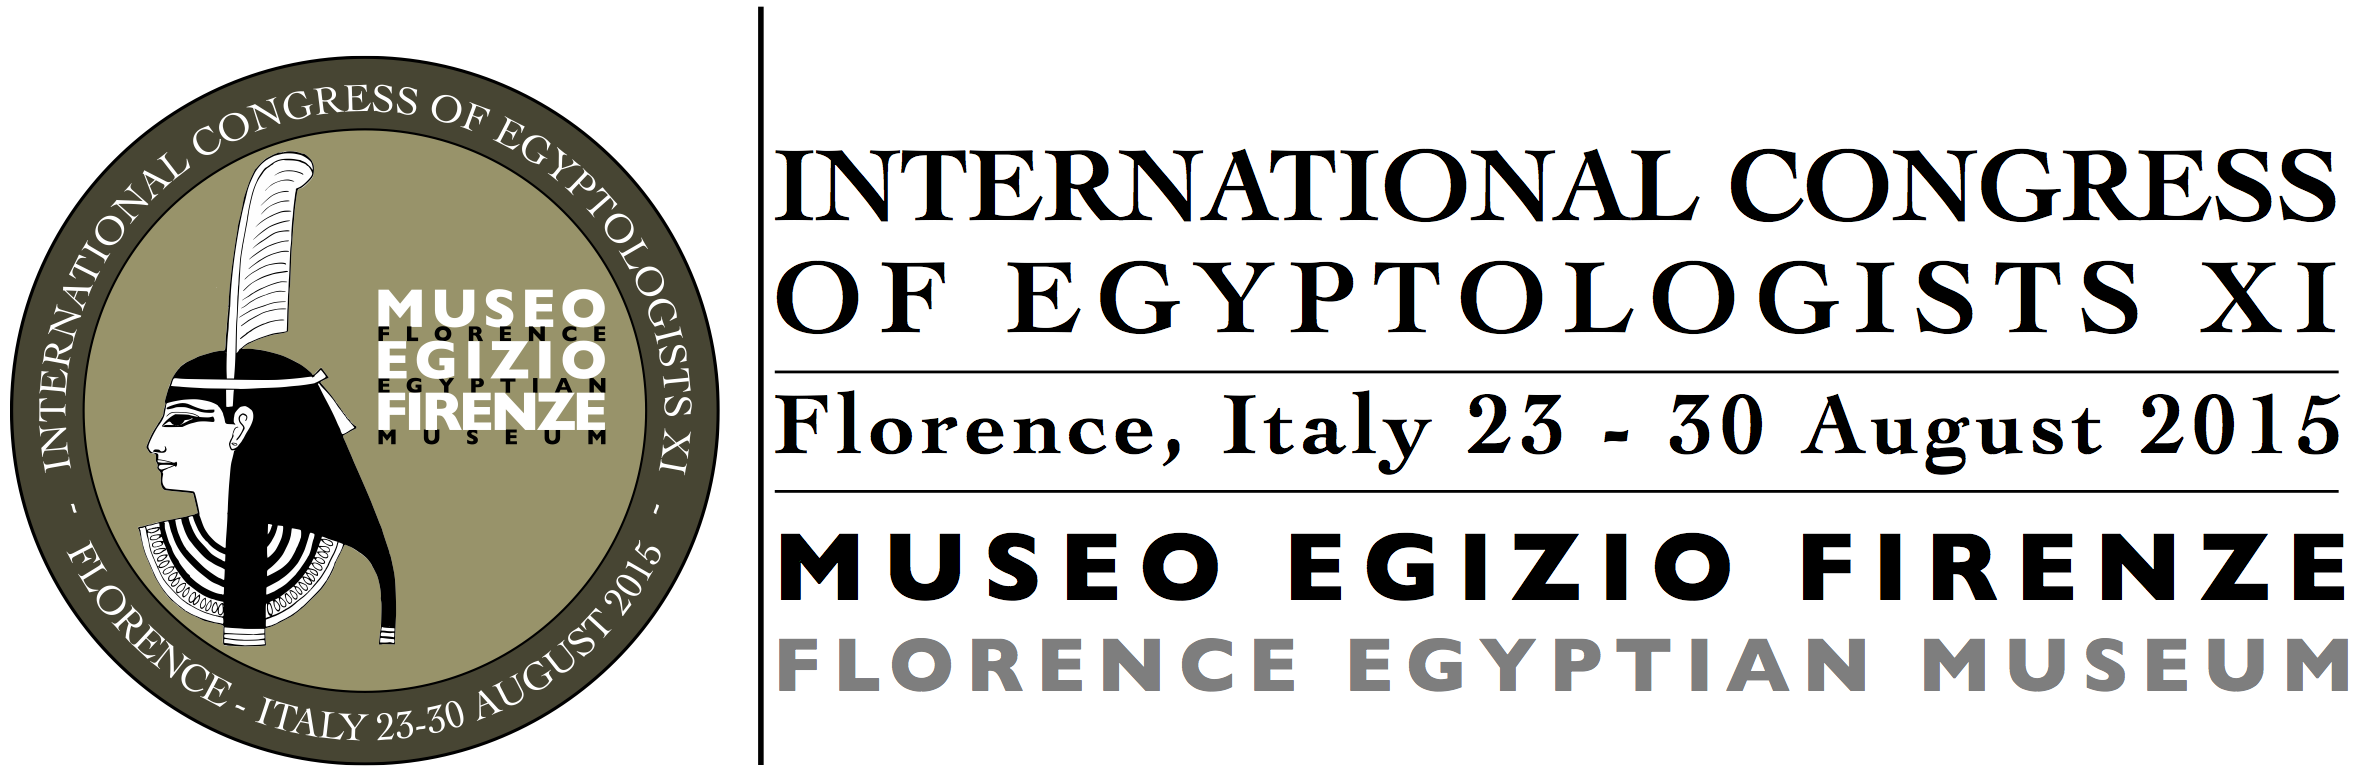 XI ICE - International Congress of Egyptologist